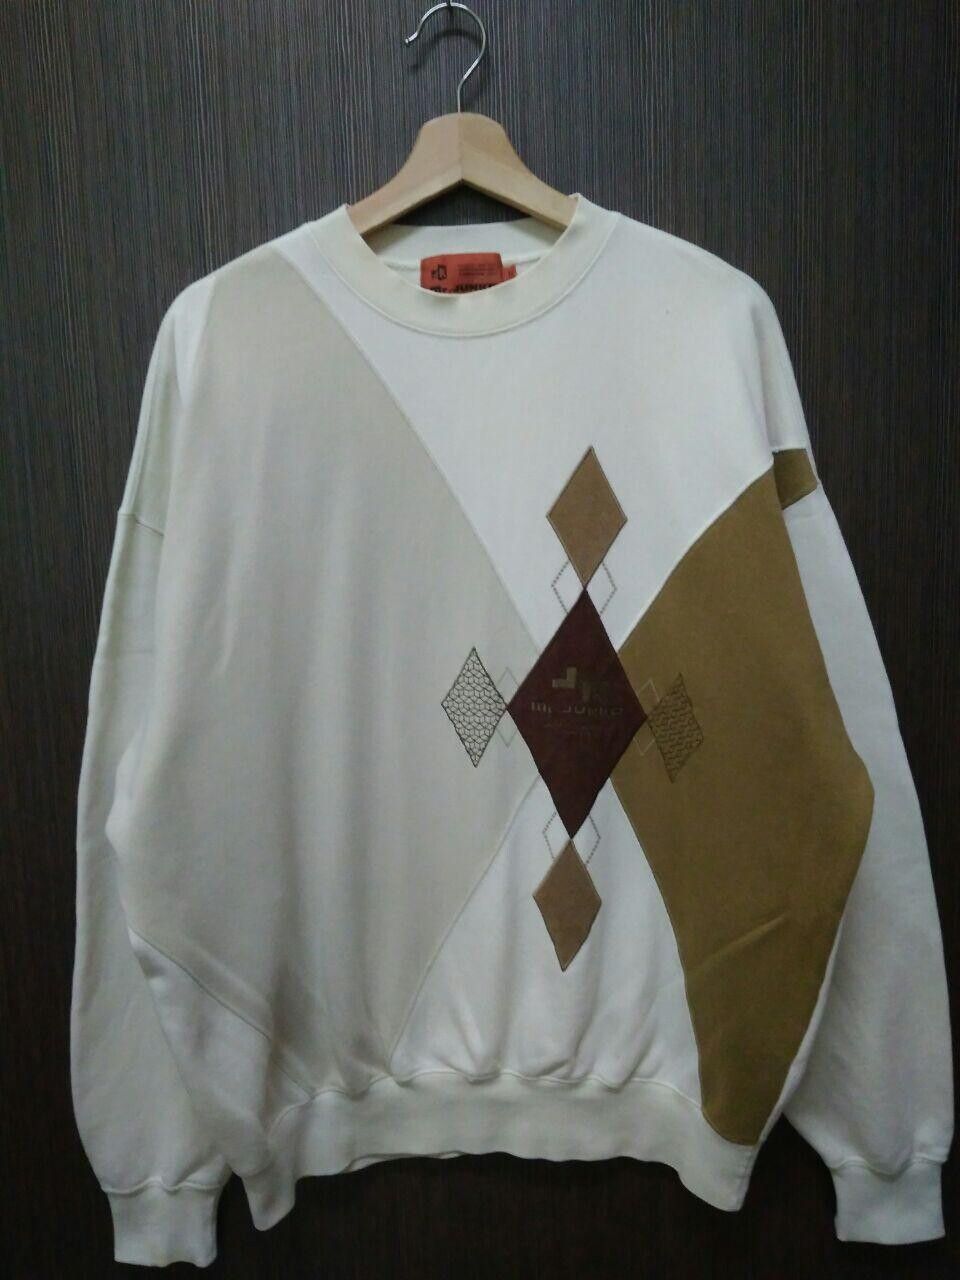 Vintage Vtg Mr Junko koshino Embroidery Sweatshirt Sweater Jumper Size US L / EU 52-54 / 3 - 1 Preview